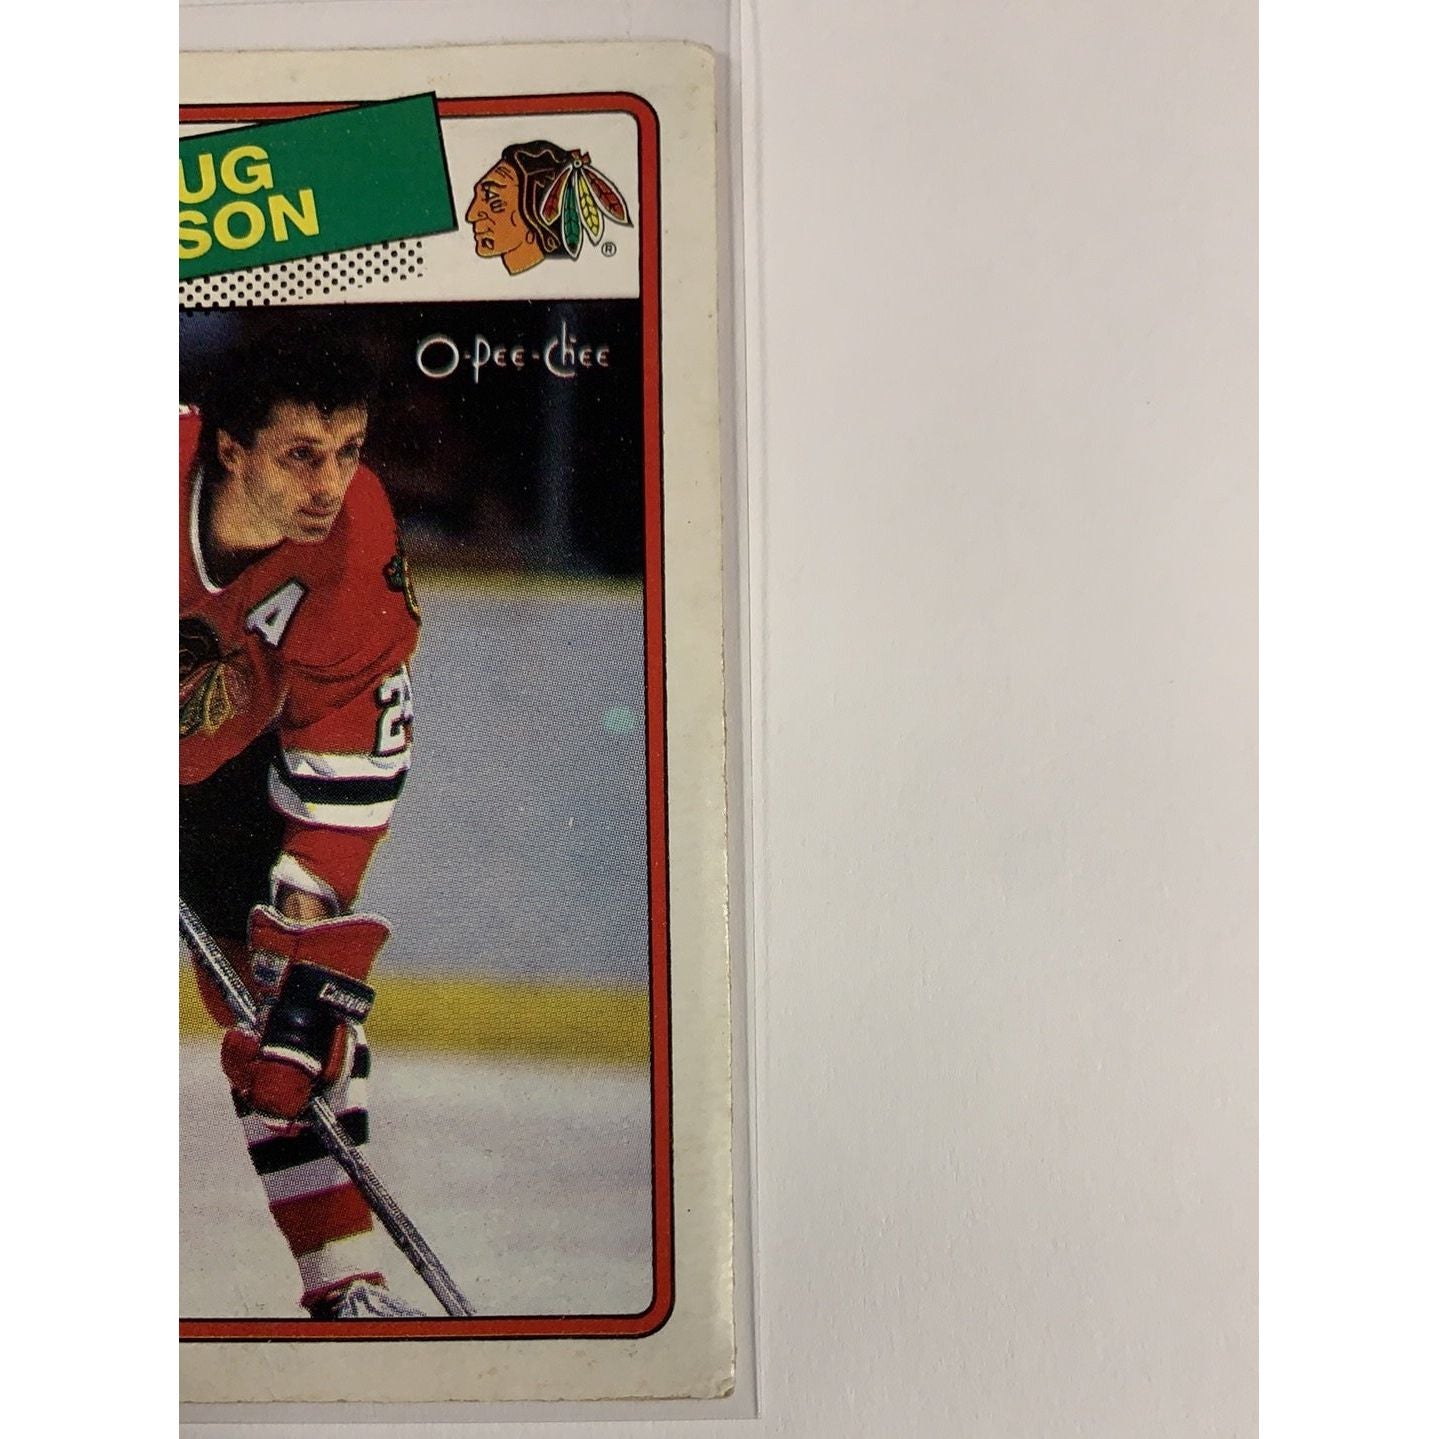  1988-89 O-Pee-Chee Doug Wilson Base #89  Local Legends Cards & Collectibles